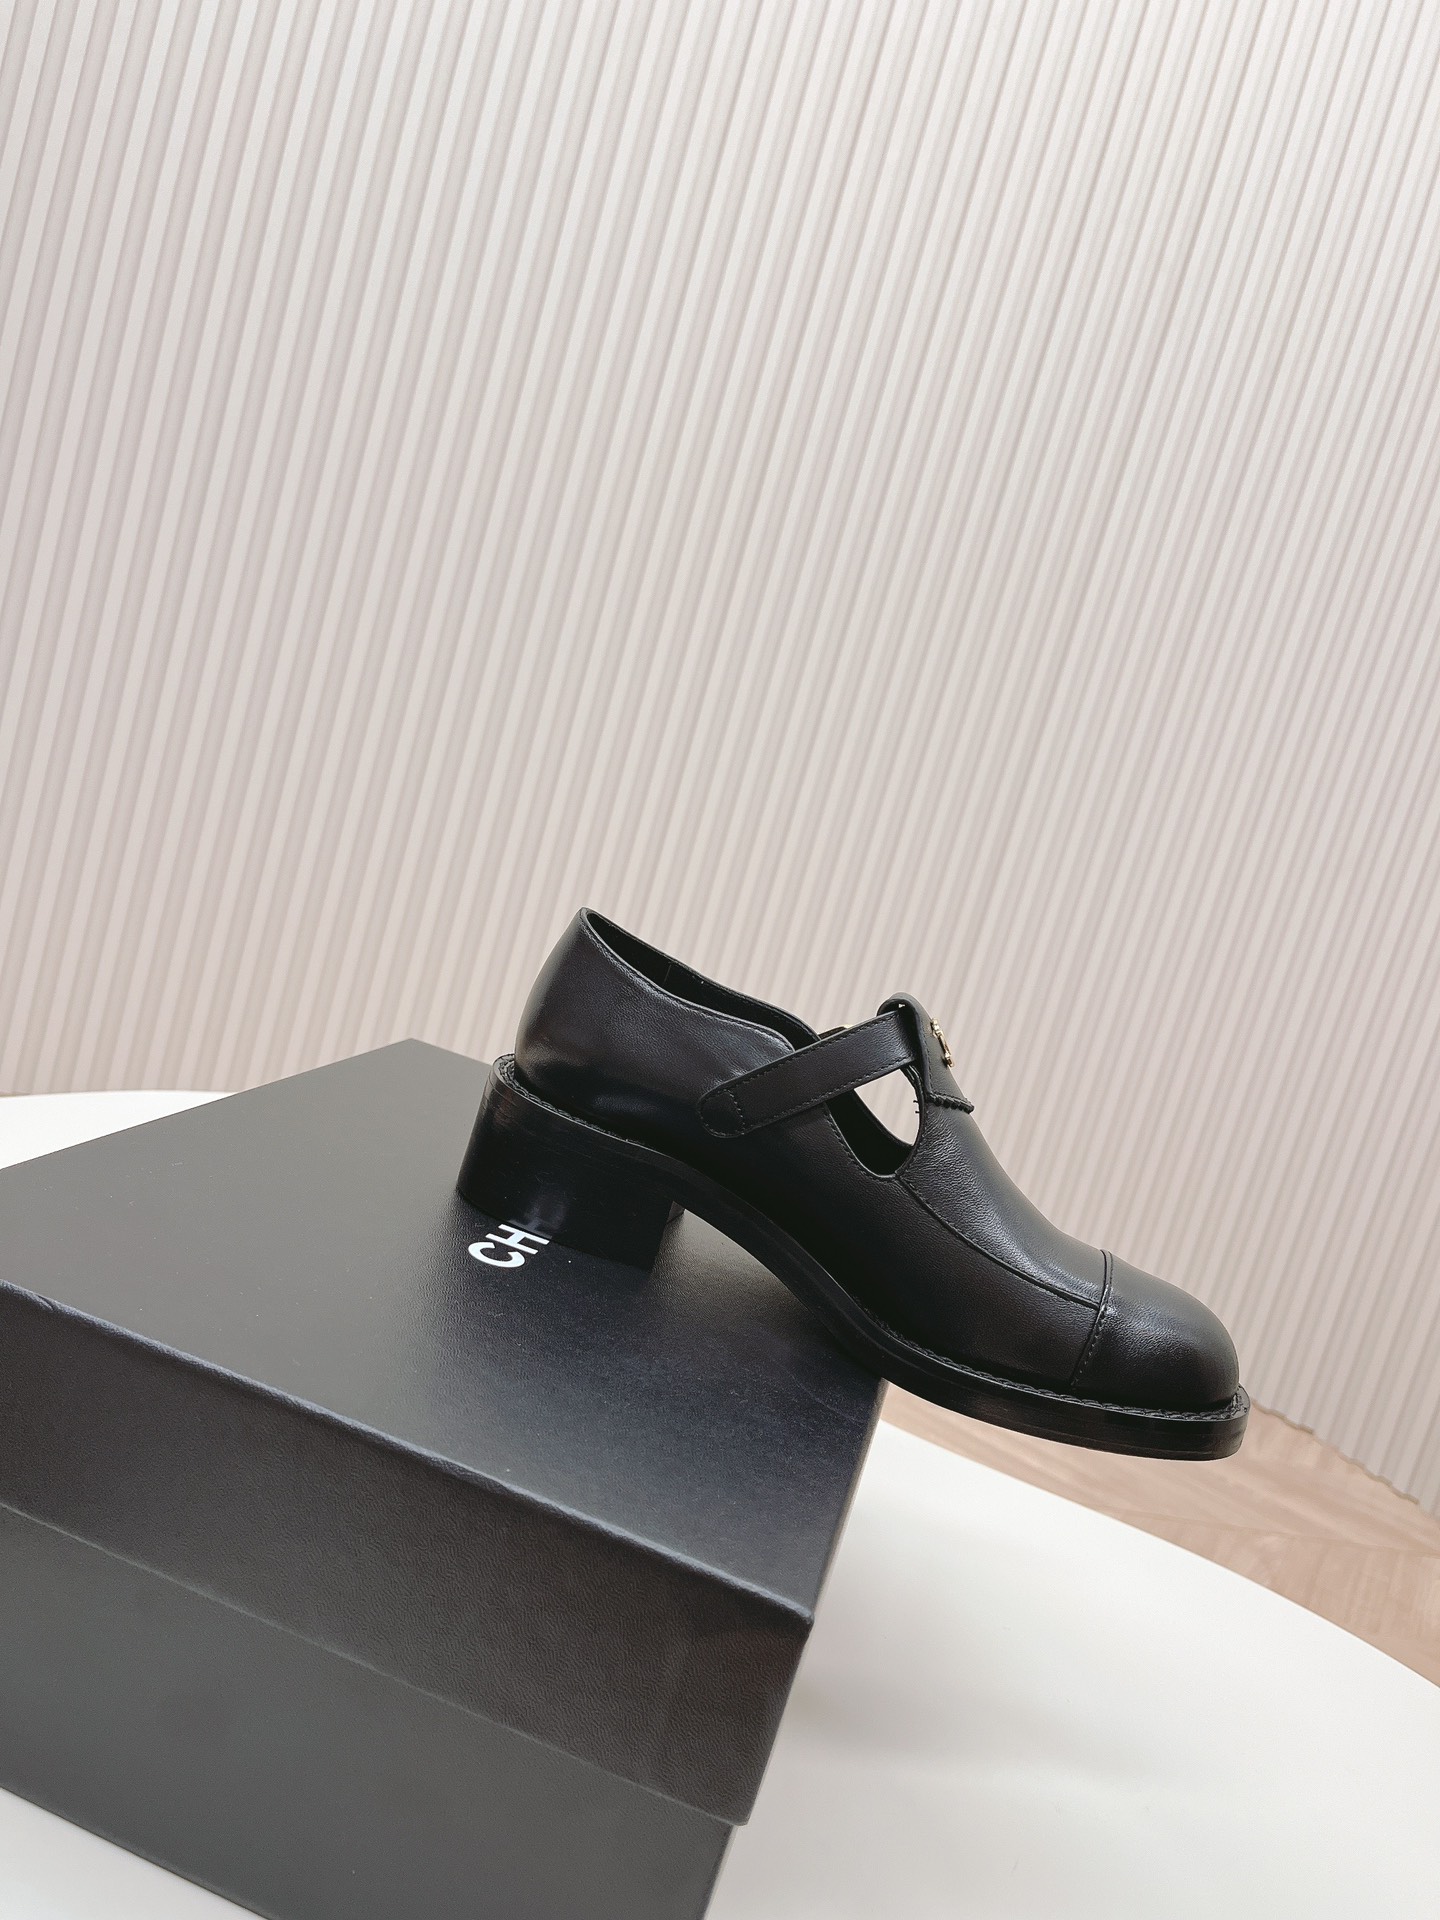 CHANELシャネルの靴Ｎ級品 レザー ファッション ローファーシンプル 厚い靴底 歩きやすい ブラック_4